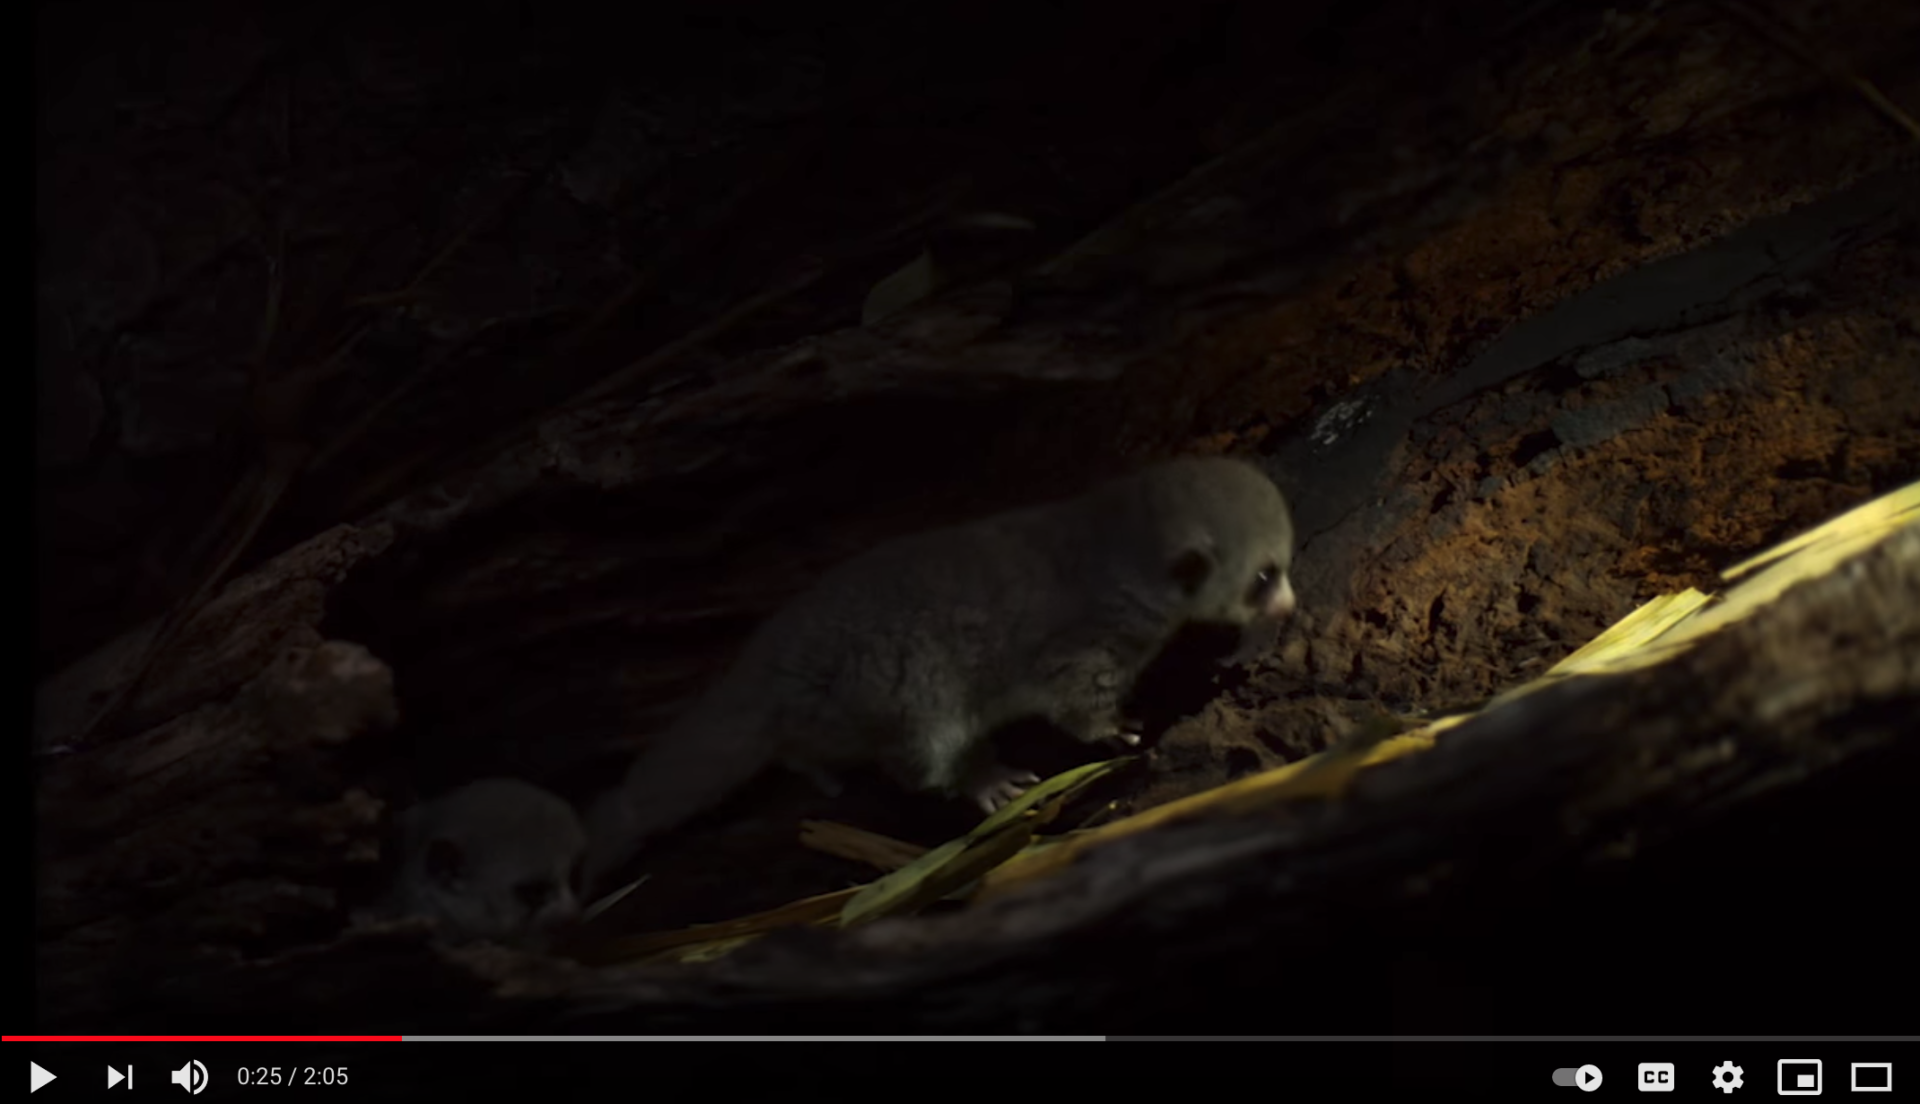 Screenshot of video showing a dwarf lemur scurrying through a hollow log